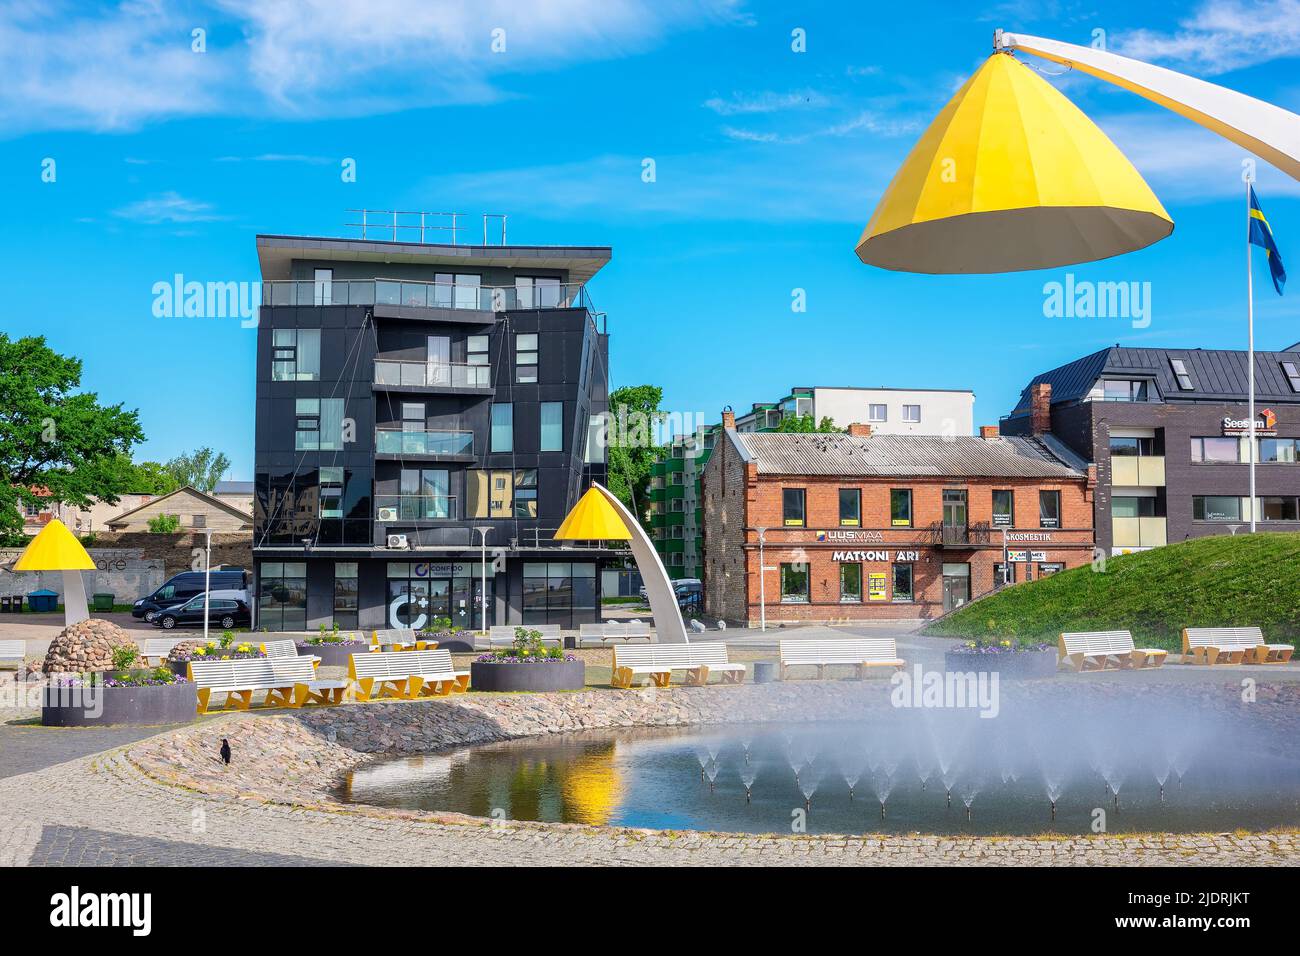 View to central square with fountain and modern yellow lanterns. Rakvere, Estonia Stock Photo